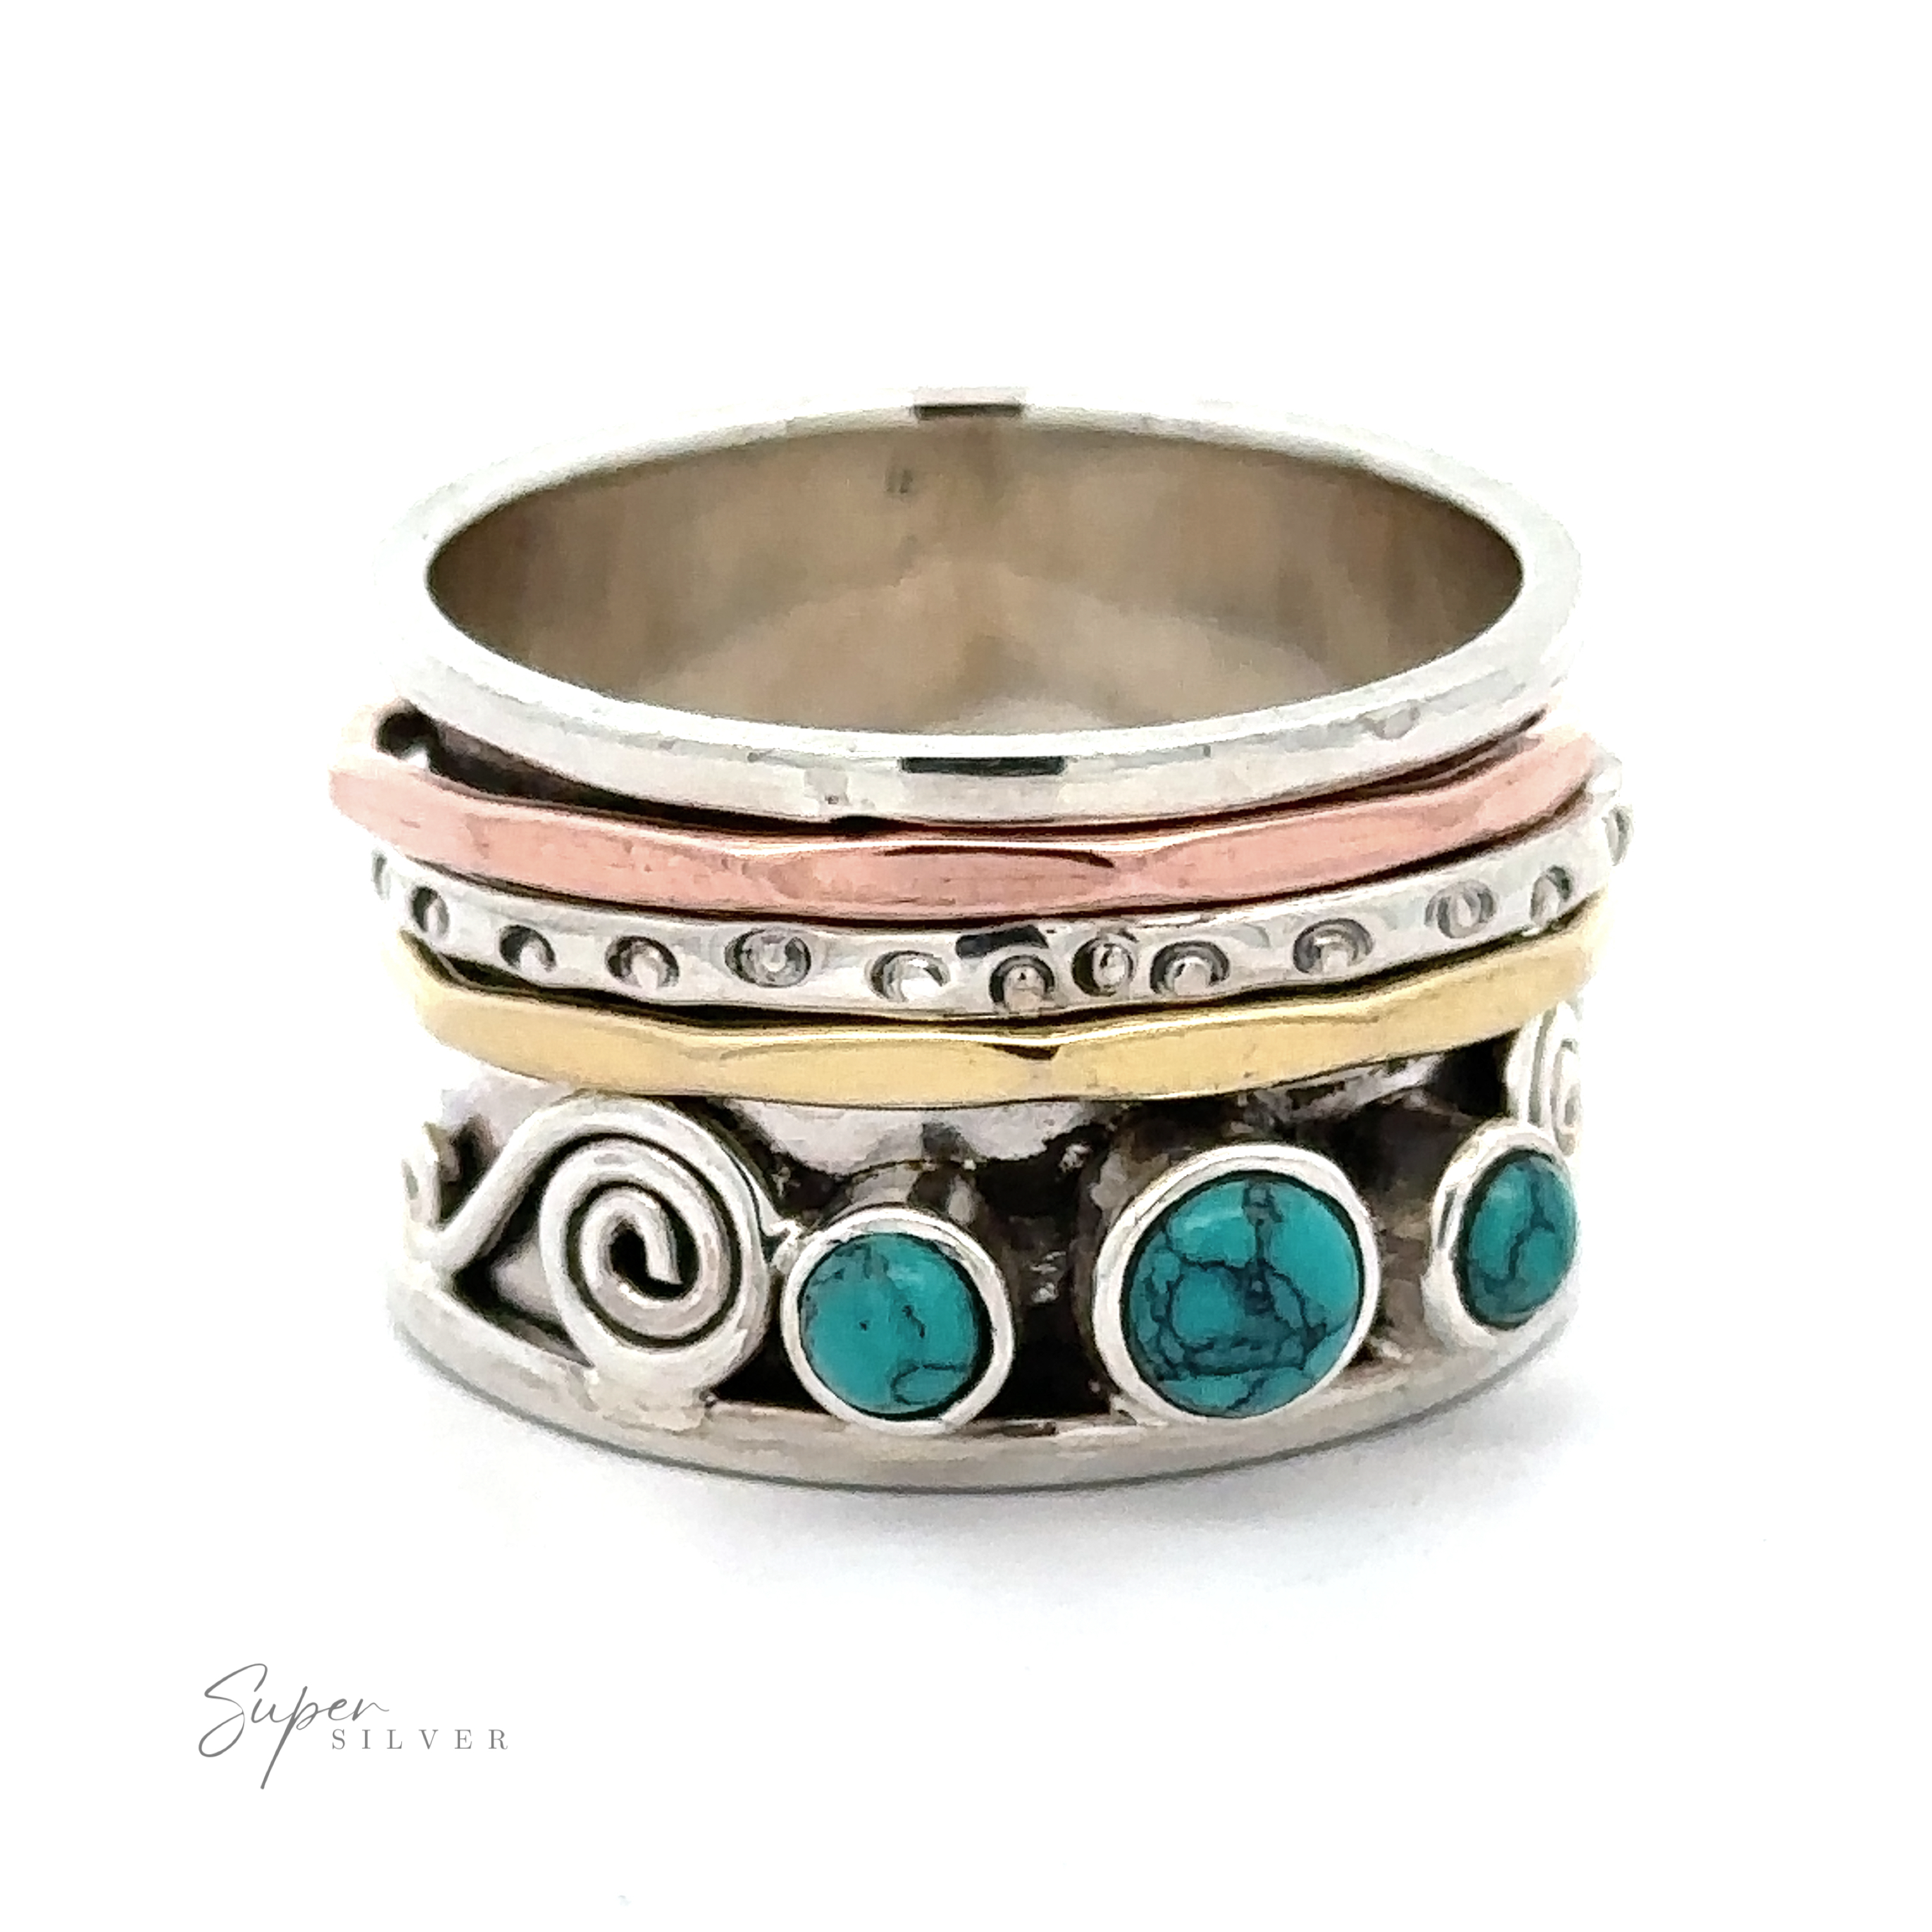 Gemstone Rings: Women's Gemstone Jewelry Rings | Ylang 23